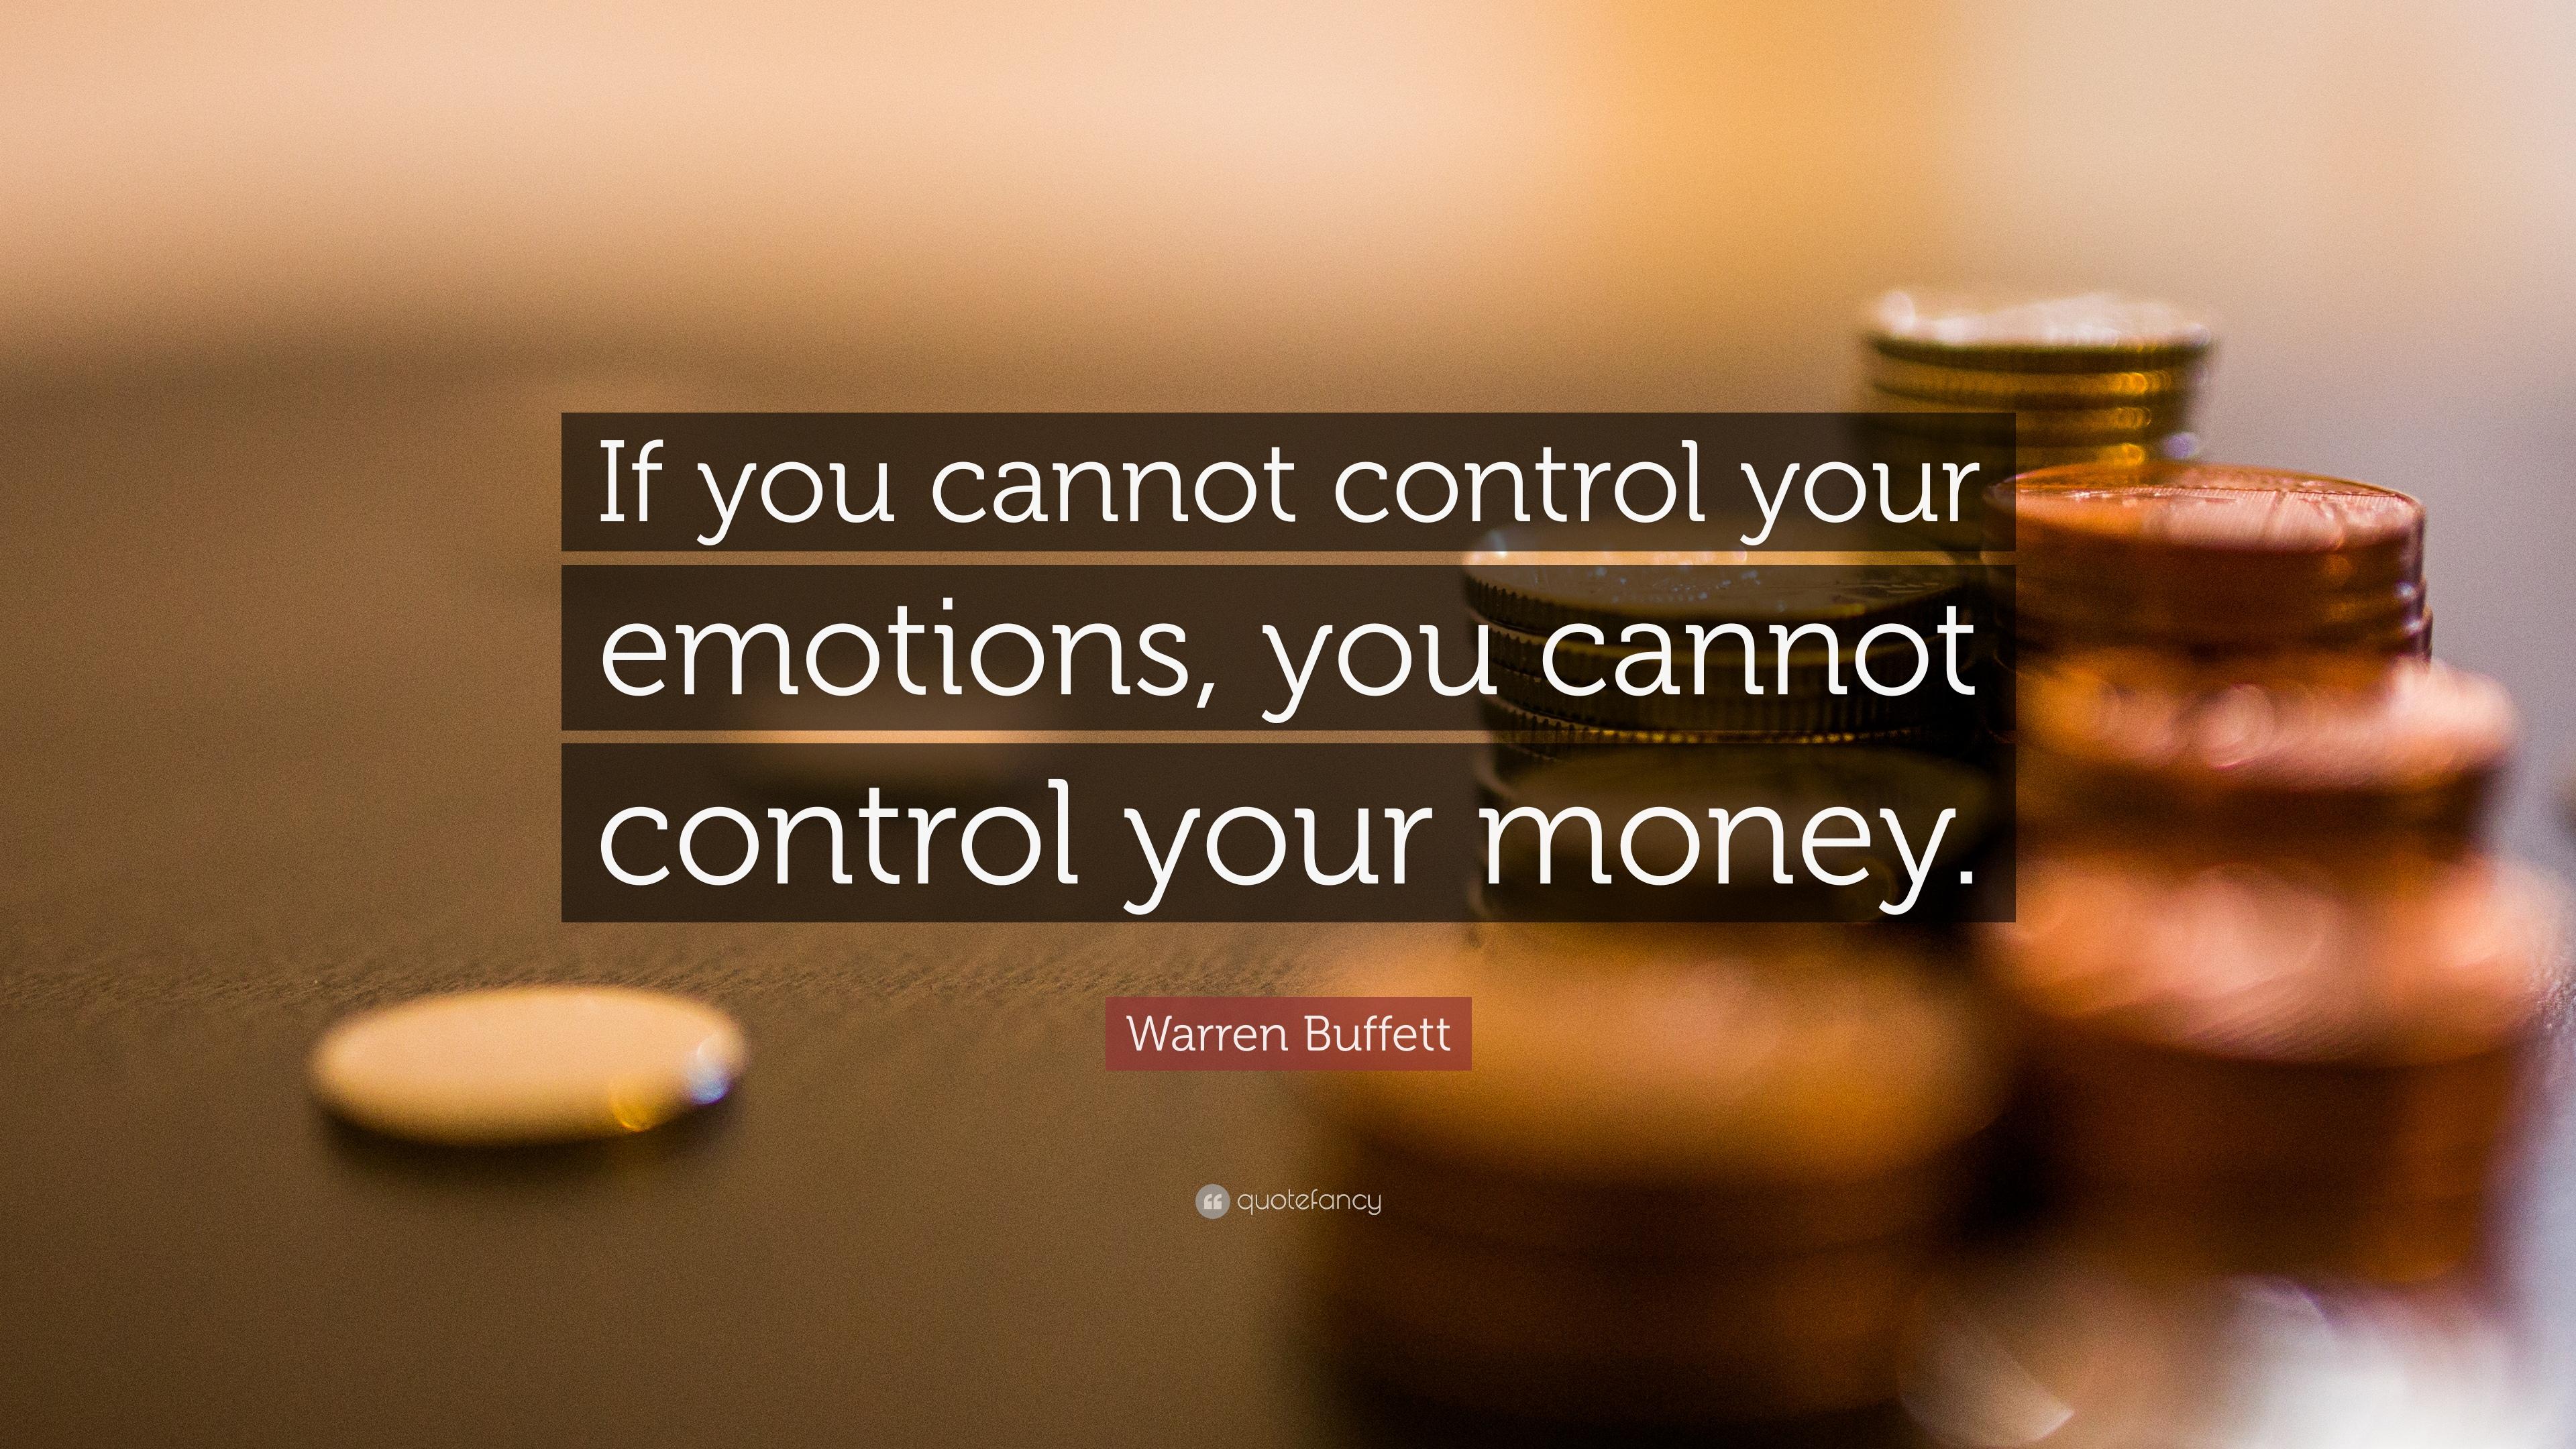 Warren Buffett Quote: “If you cannot control your emotions, you